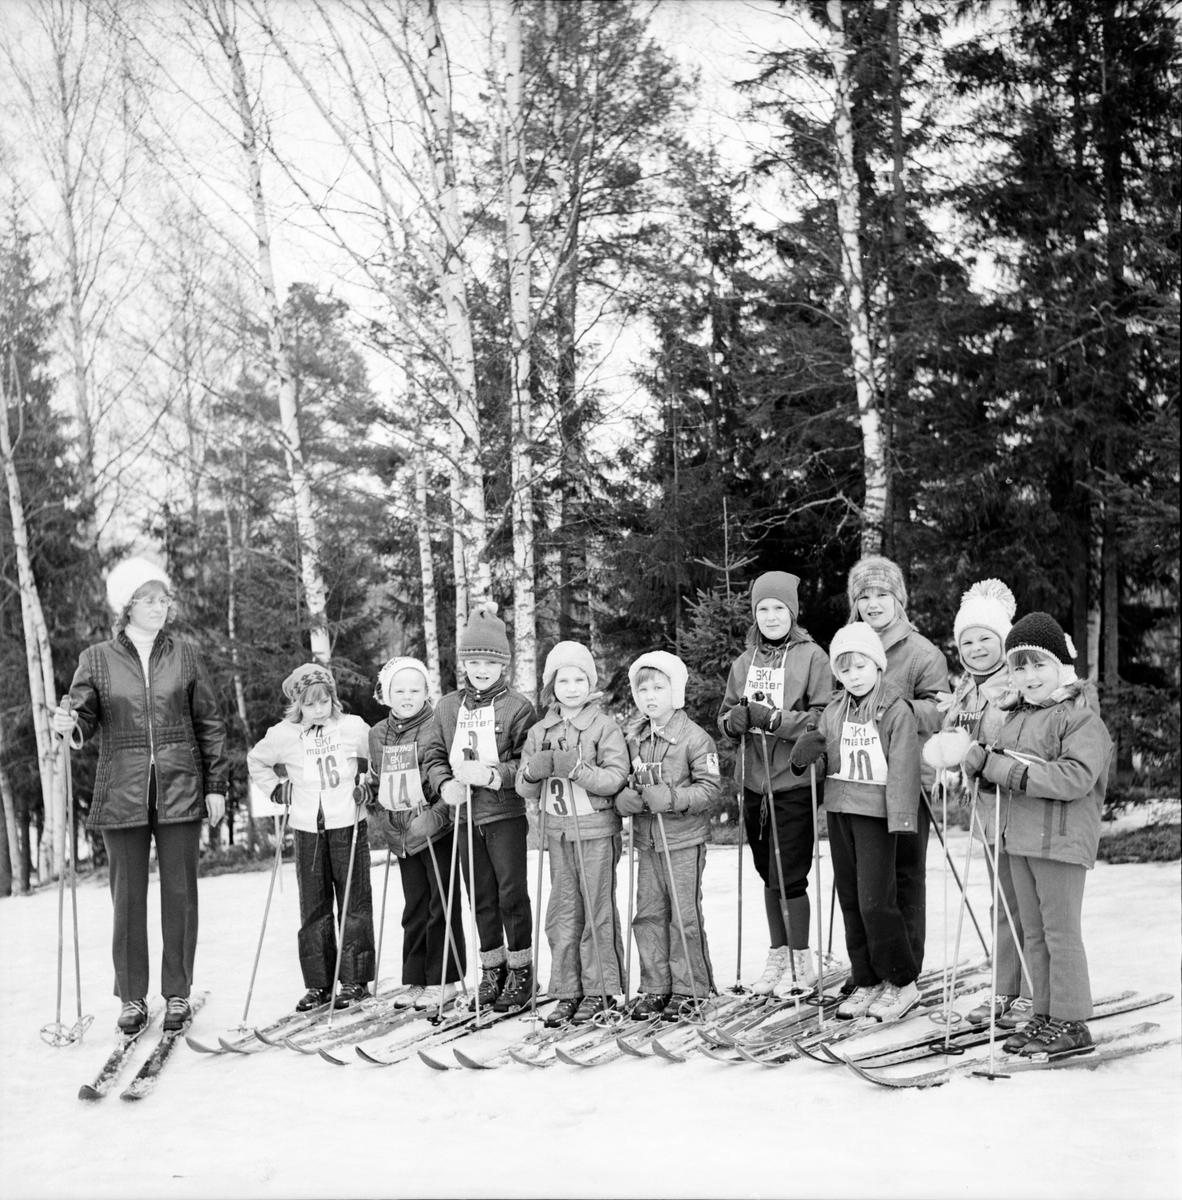 Skidskoleavslutning i Arbrå, mars 1973.
Bland barnen syns Ingela Jönsson, Gun-Marie Svärd, Kristina Andersson, Bodil Edman och Inger Jonsson.